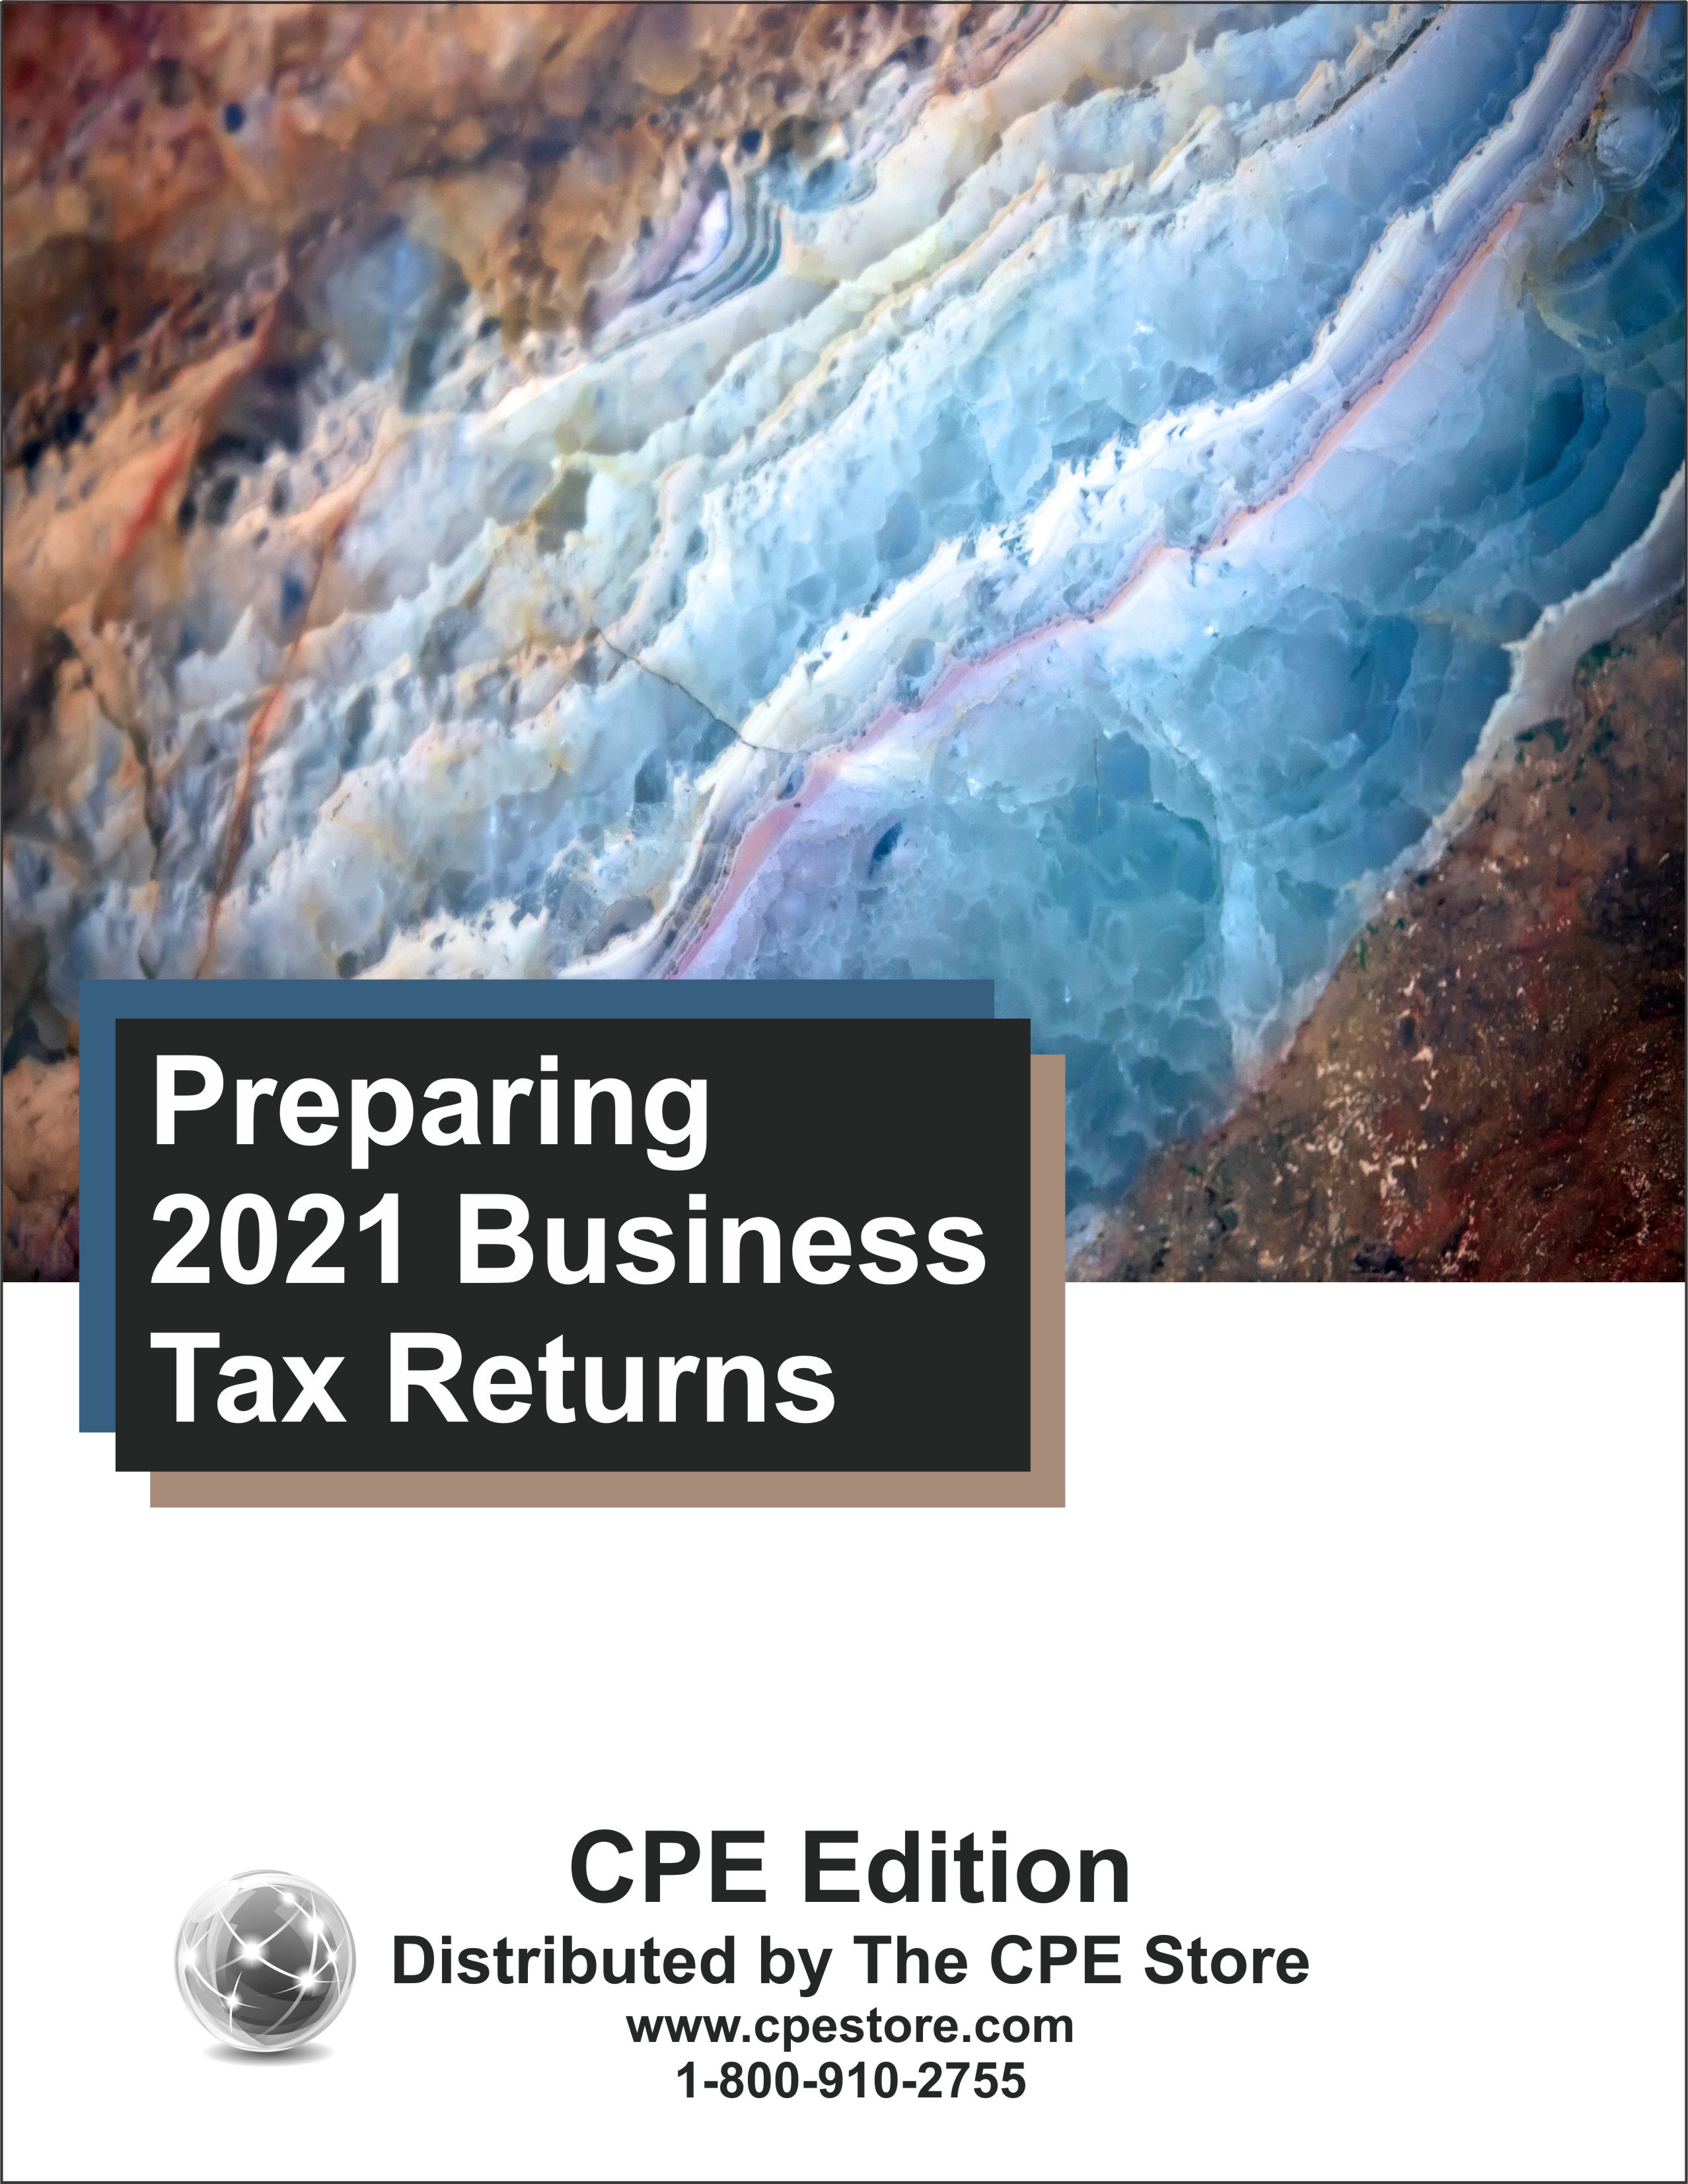 Preparing 2021 Business Tax Returns